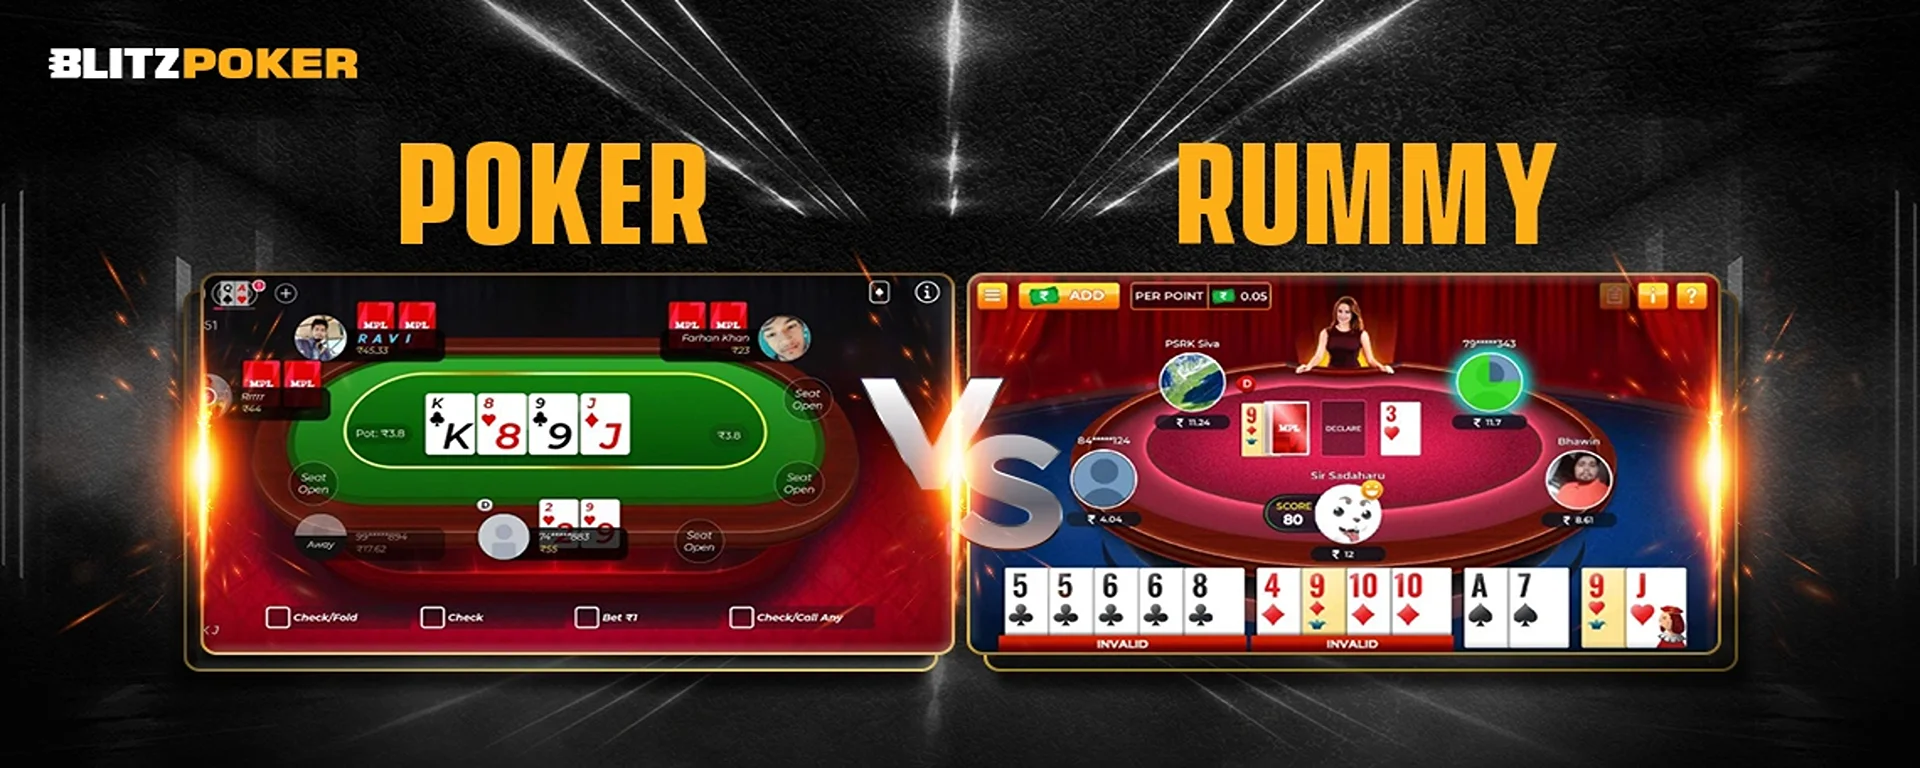 Poker vs Rummy